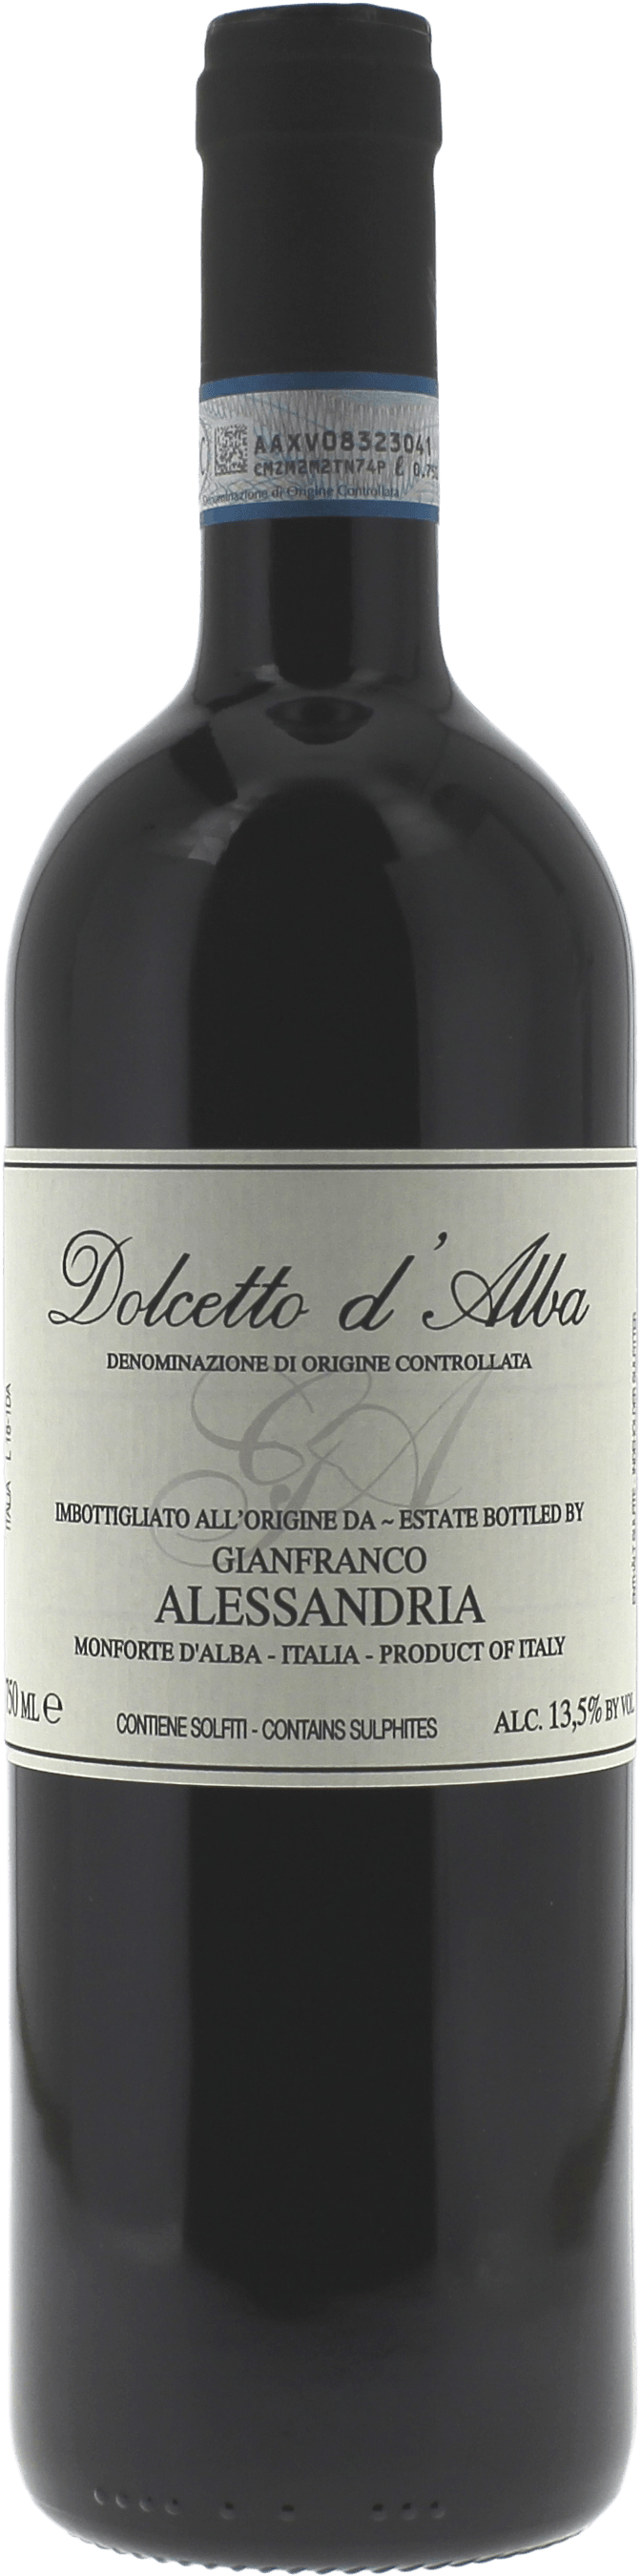 Alessandria gianfranco - dolcetto d'alba 2020  Italie, Vin italien